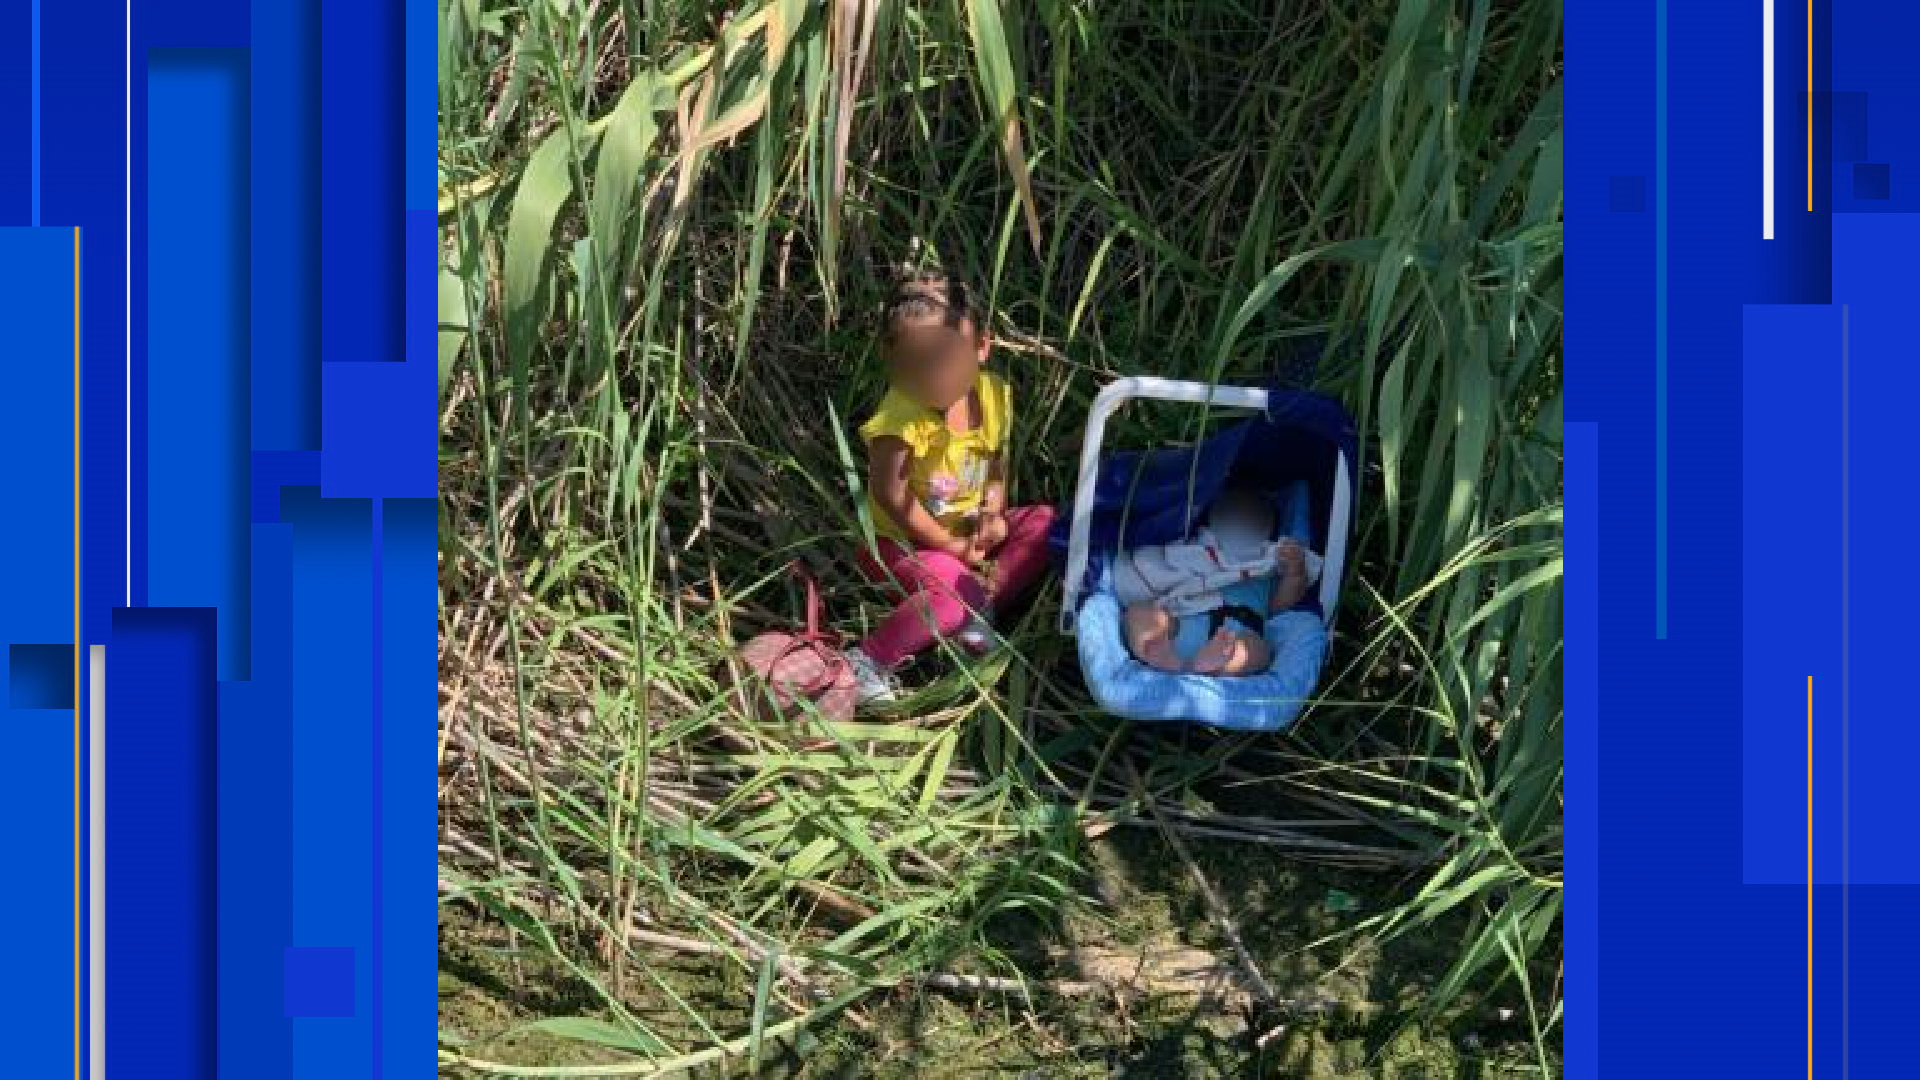 Toddler Infant Found Abandoned On Bank Of Rio Grande At Border